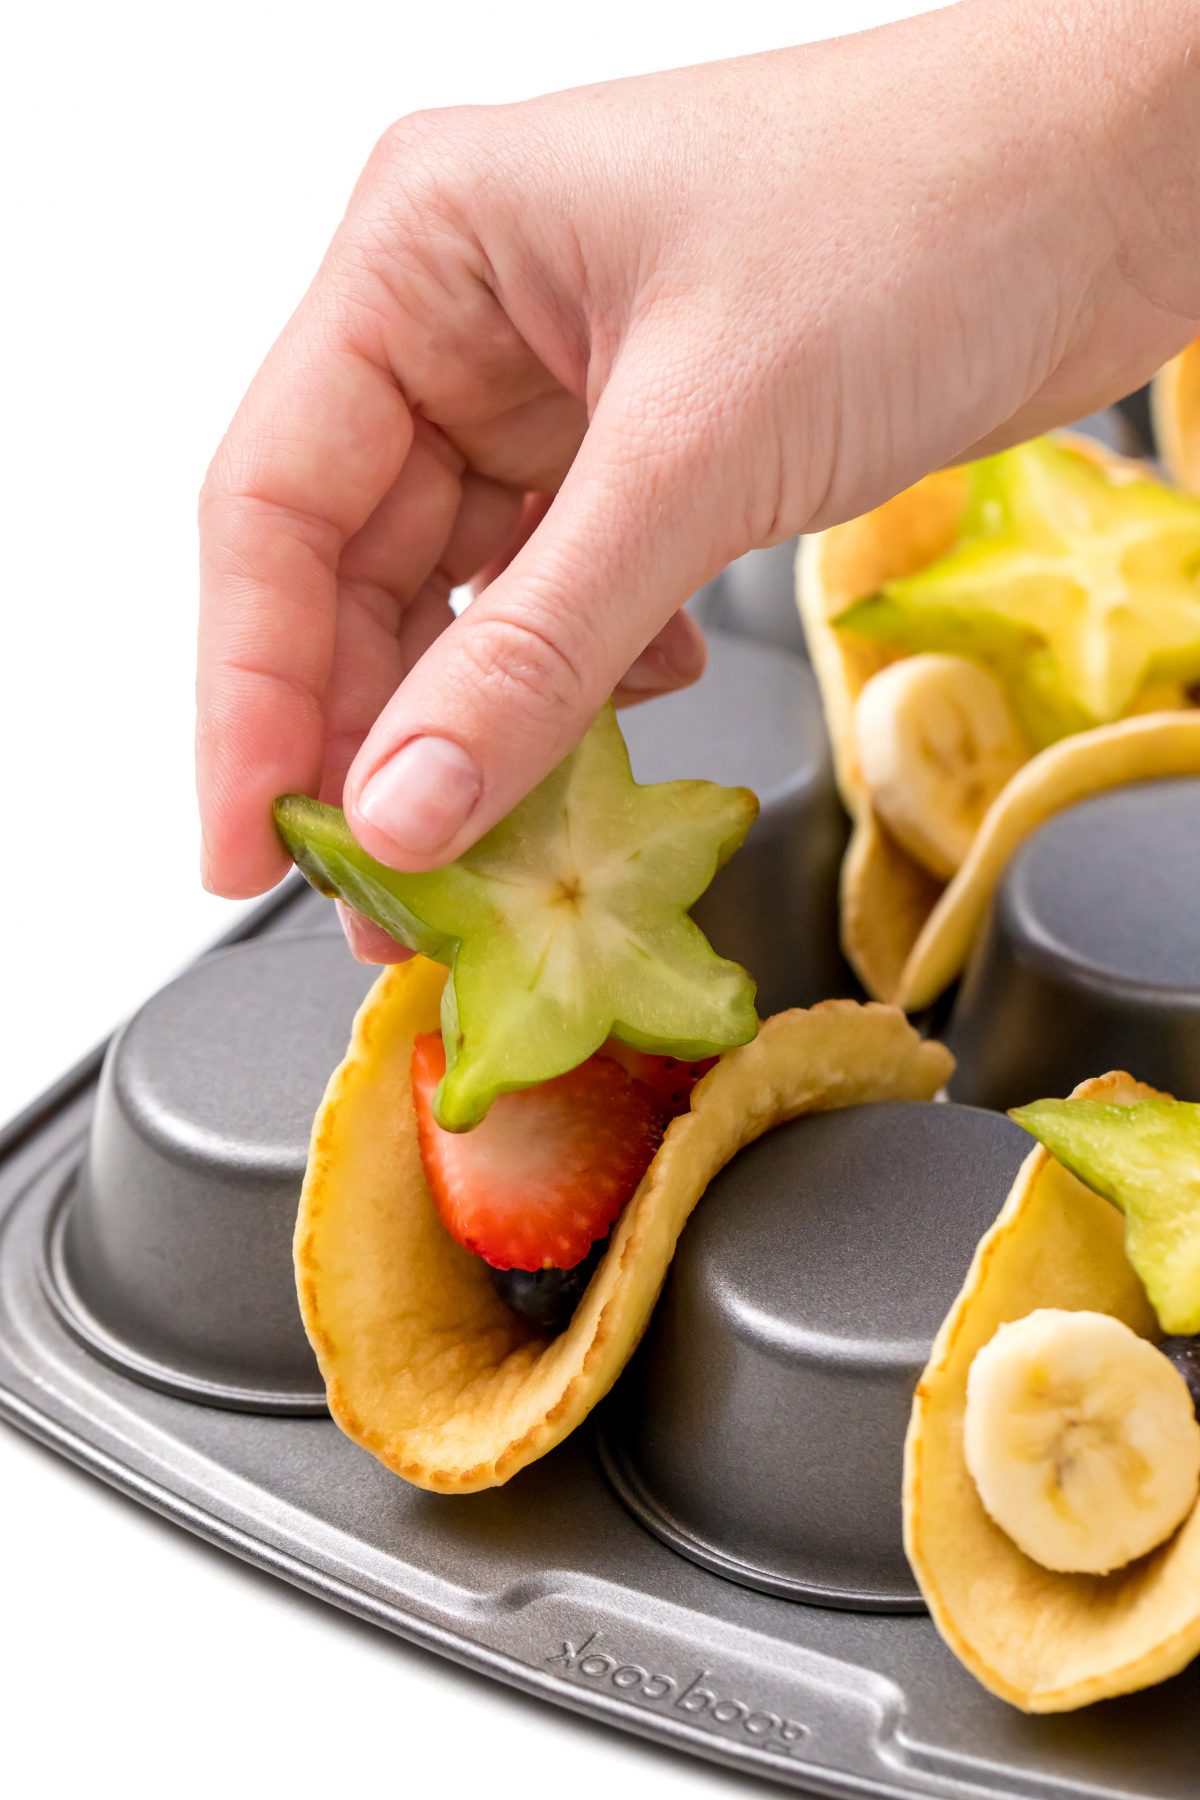 Place bananas and starfruit inside of pancake taco